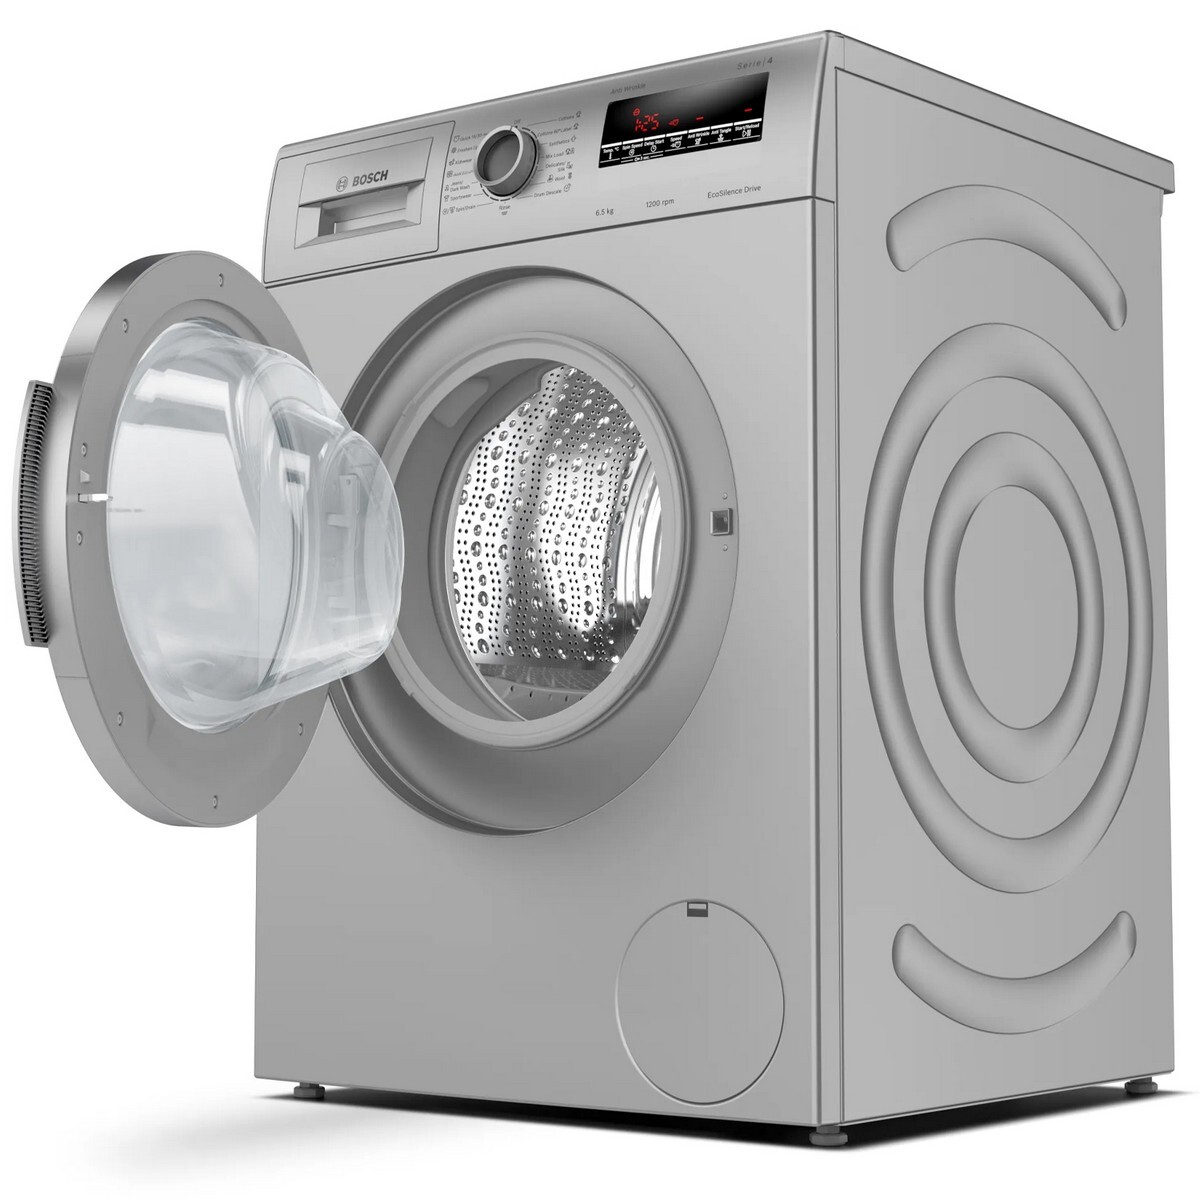 Bosch Front Load Washing Machine WAJ2426IIN 6.5Kg Silver